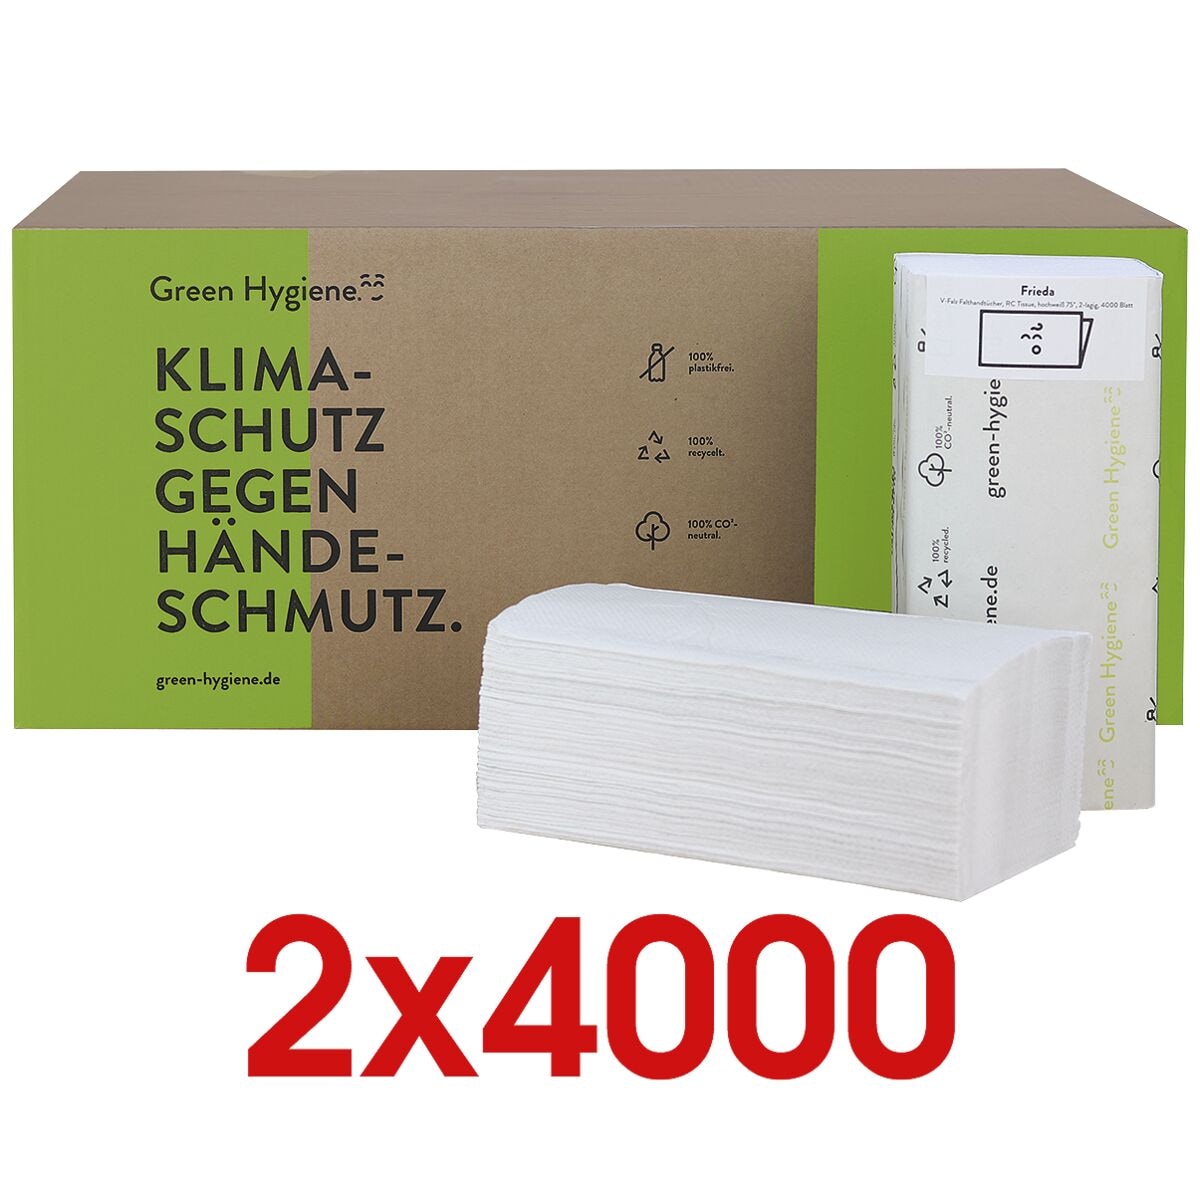 2x Papierhandtcher Green Hygiene Frieda CO₂ neutral produziert 2-lagig, hochwei, 25 cm x 23 cm aus Recycling-Tissue aus 100% Altpapier mit Z-Falzung - 8000 Blatt gesamt